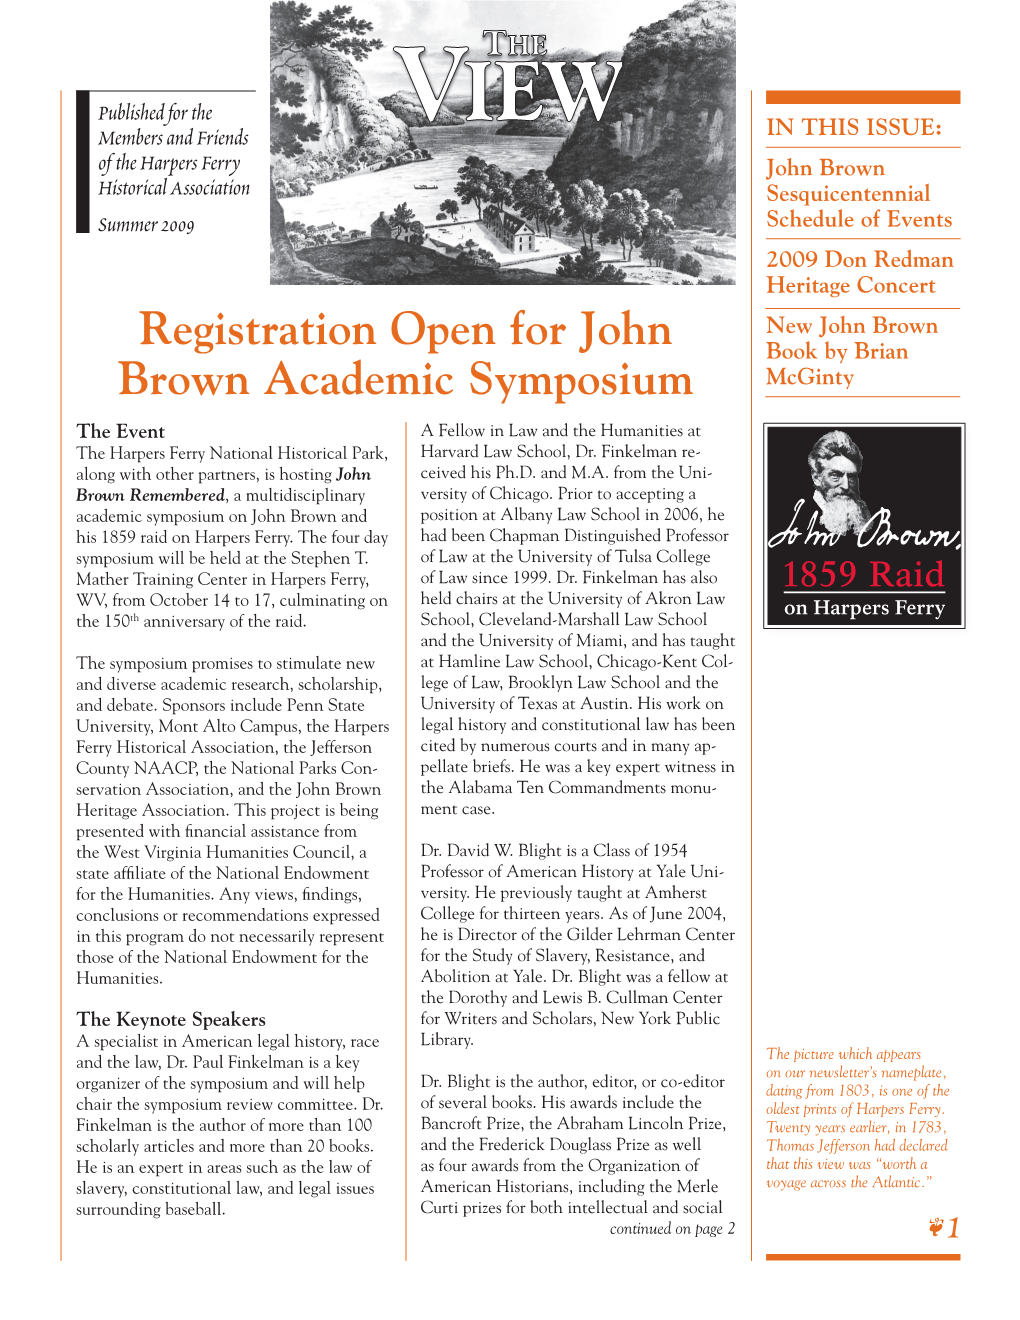 Registration Open for John Brown Academic Symposium